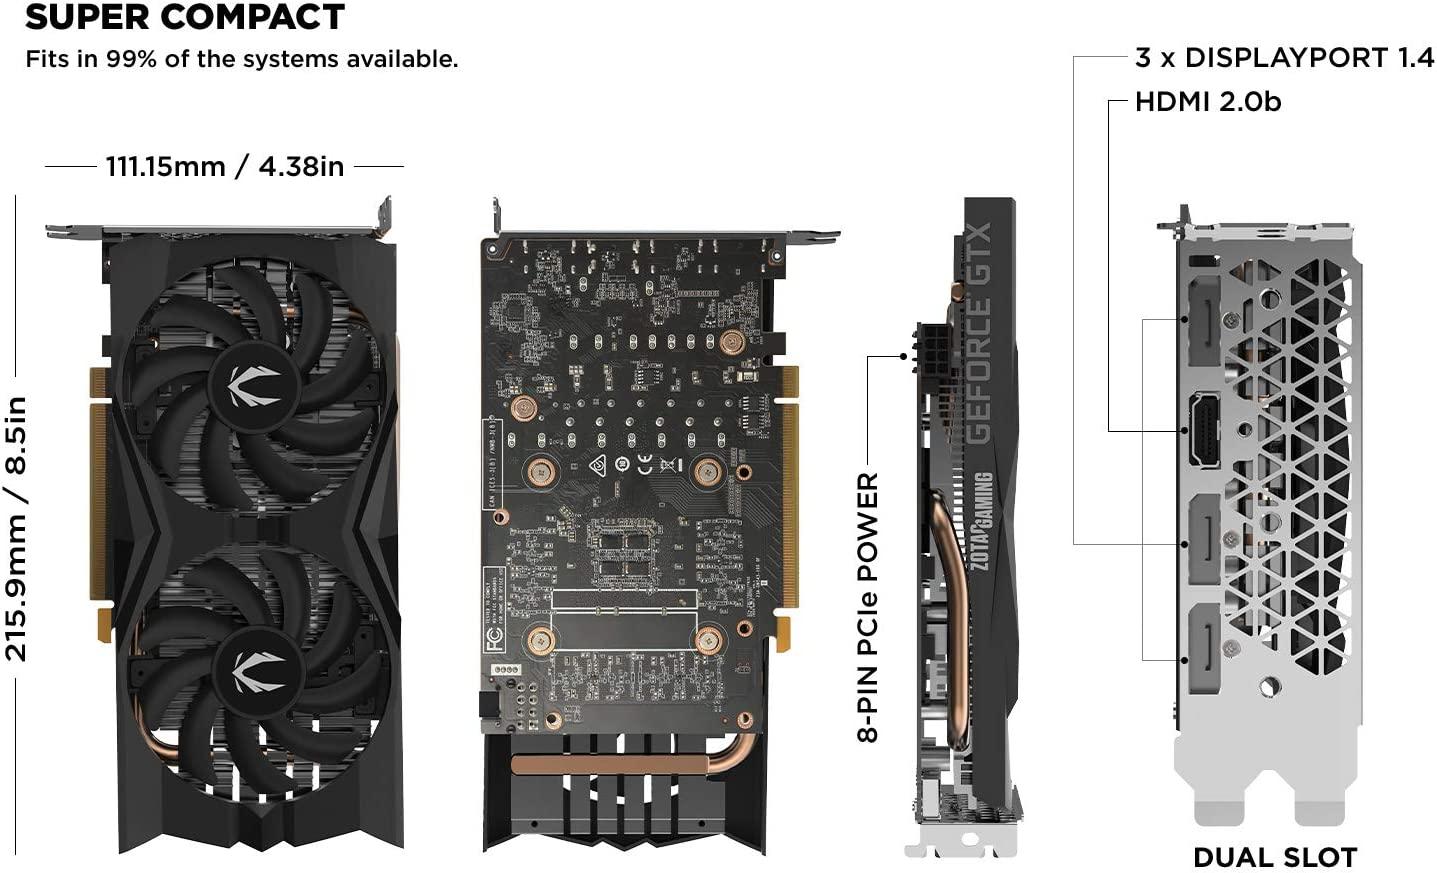 ZOTAC GAMING GeForce GTX 1660 Twin Fan ZT-T16600K-10M Nvidia GPU Graphic Card